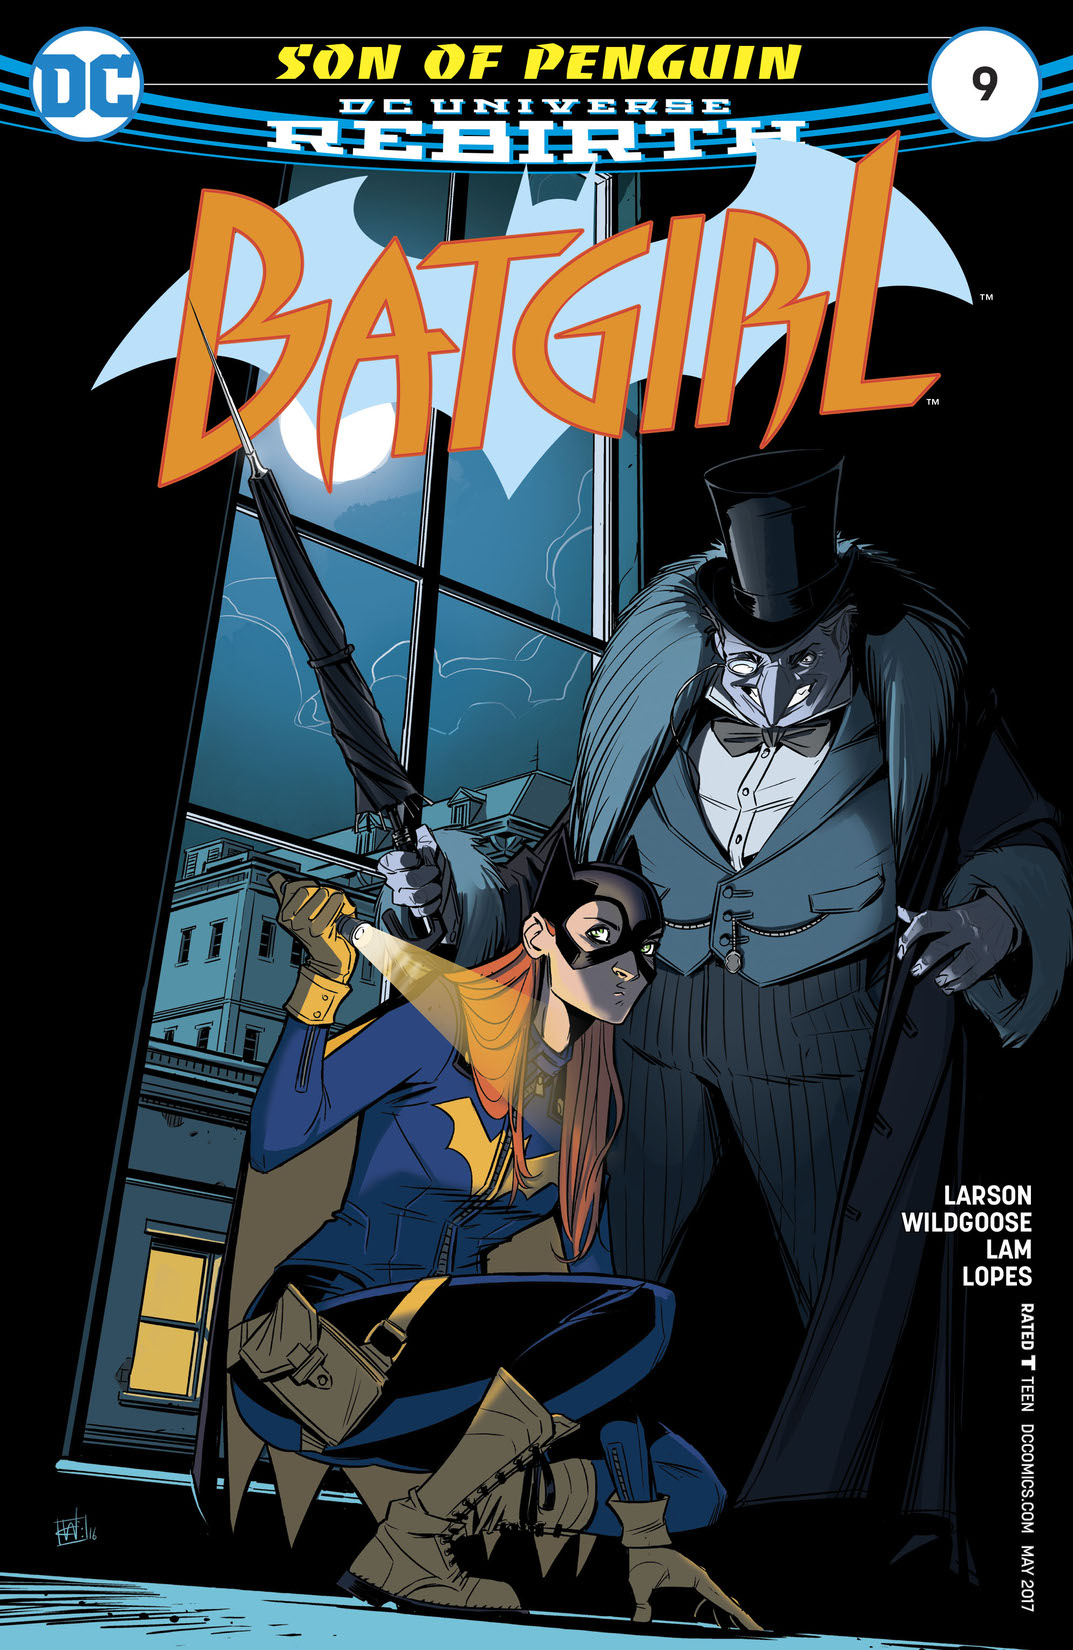 Batgirl (2016-) #9 preview images